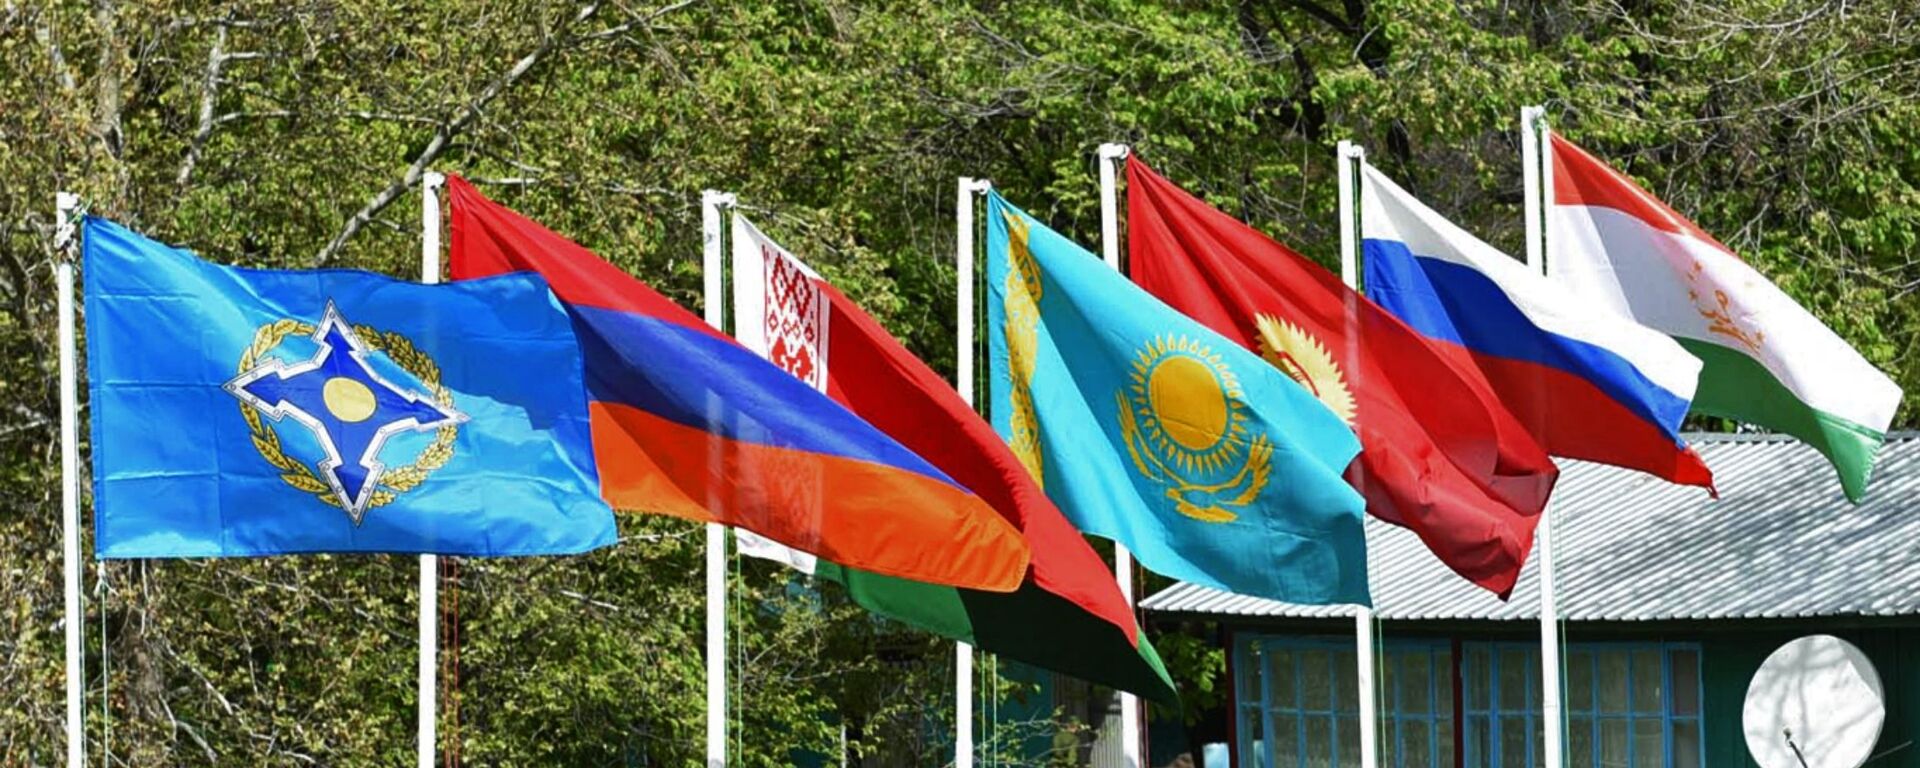 Архивное фото флагов стран-участниц ОДКБ: Таджикистана, России, Киргизии, Казахстана, Белоруссии, Армении и флаг ОДКБ (справа налево) - Sputnik Қазақстан, 1920, 23.11.2023